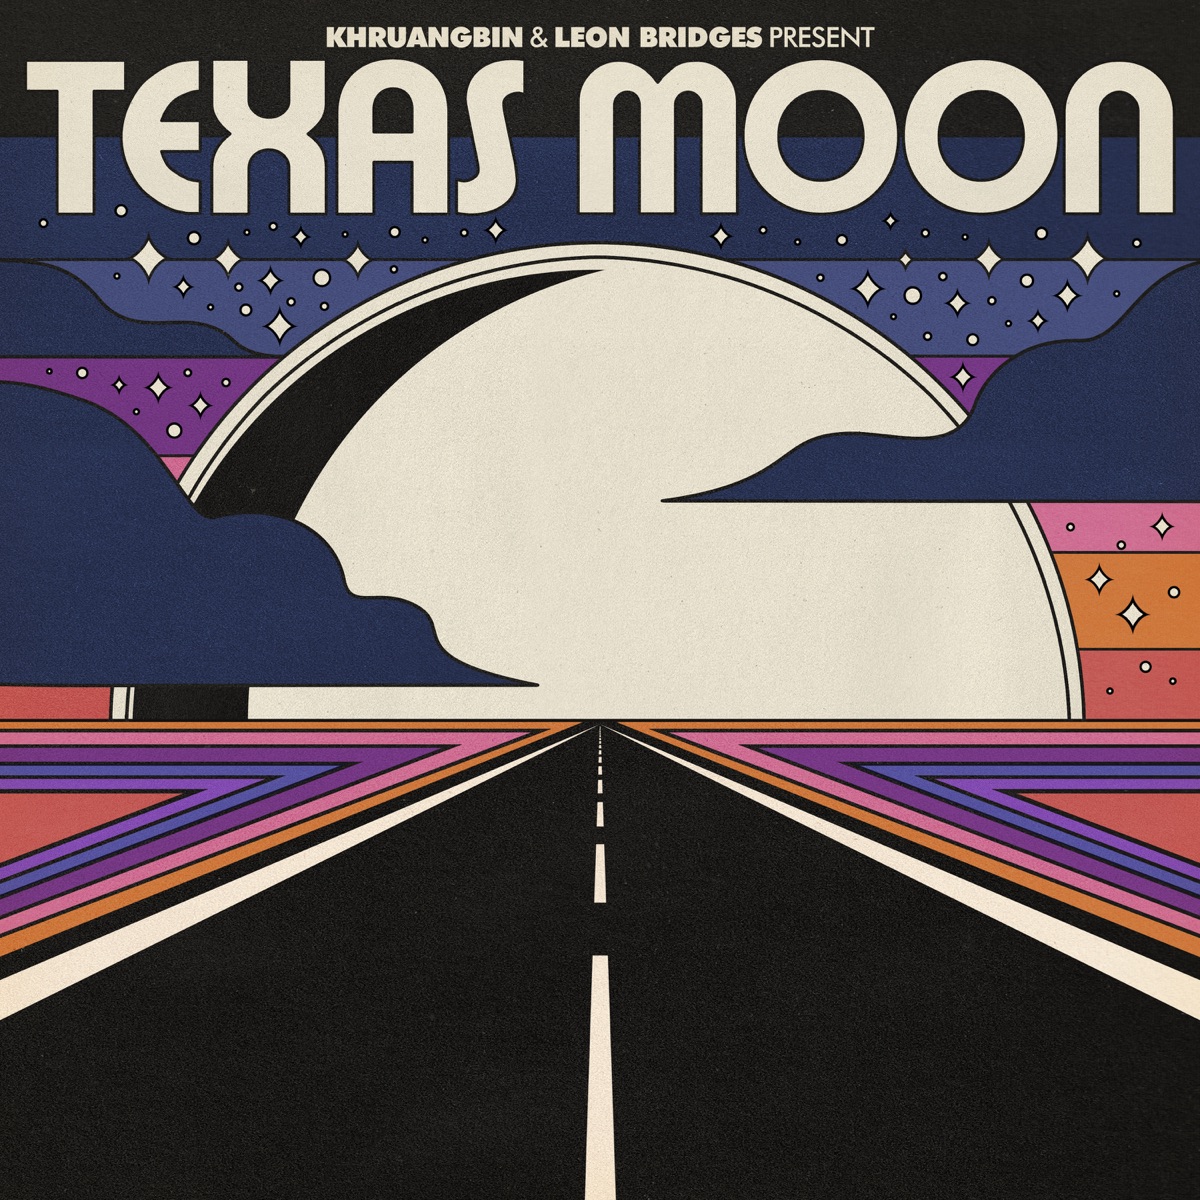 Khruangbin & Leon Bridges - Texas Moon - EP